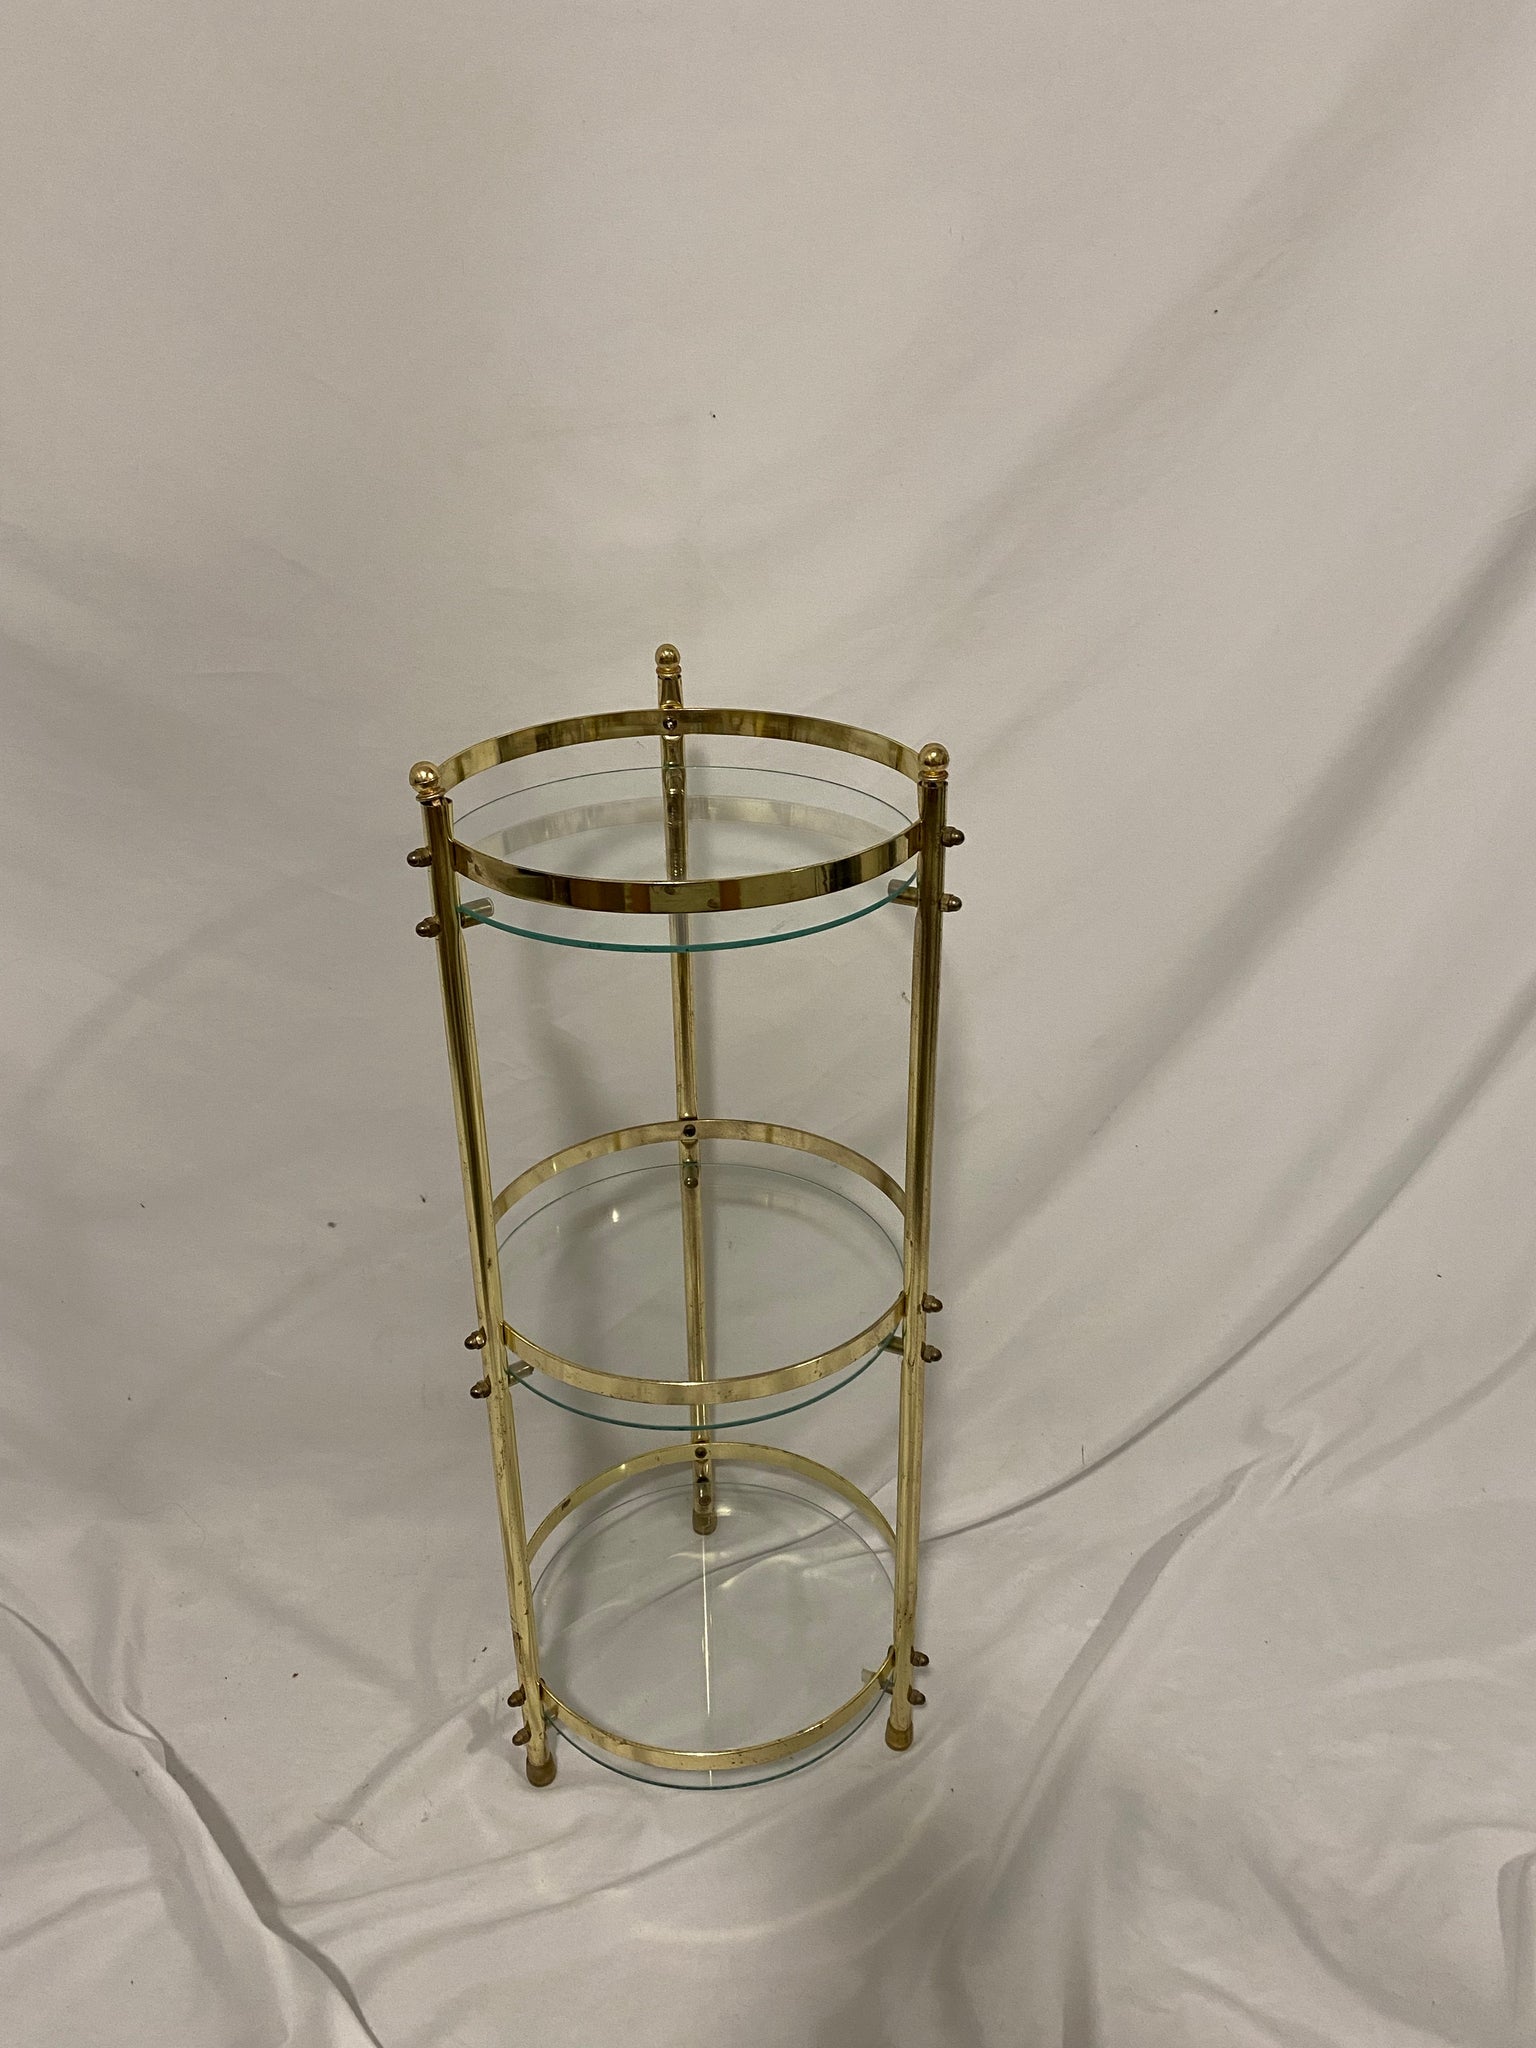 Cute little cylindrical brass & glass table / shelf